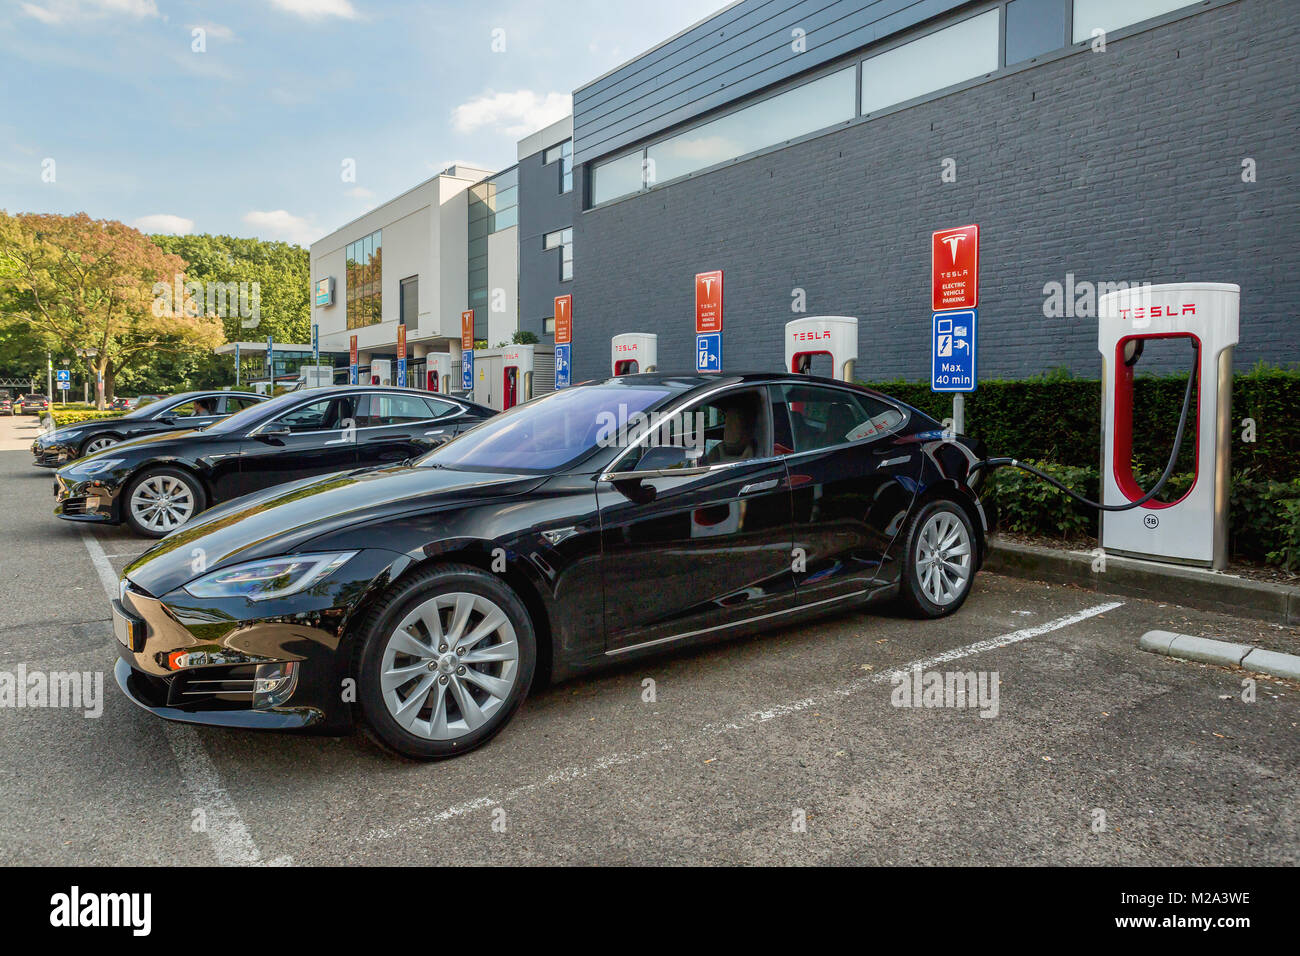 Tesla tilburg netherlands hi-res stock photography and images - Alamy